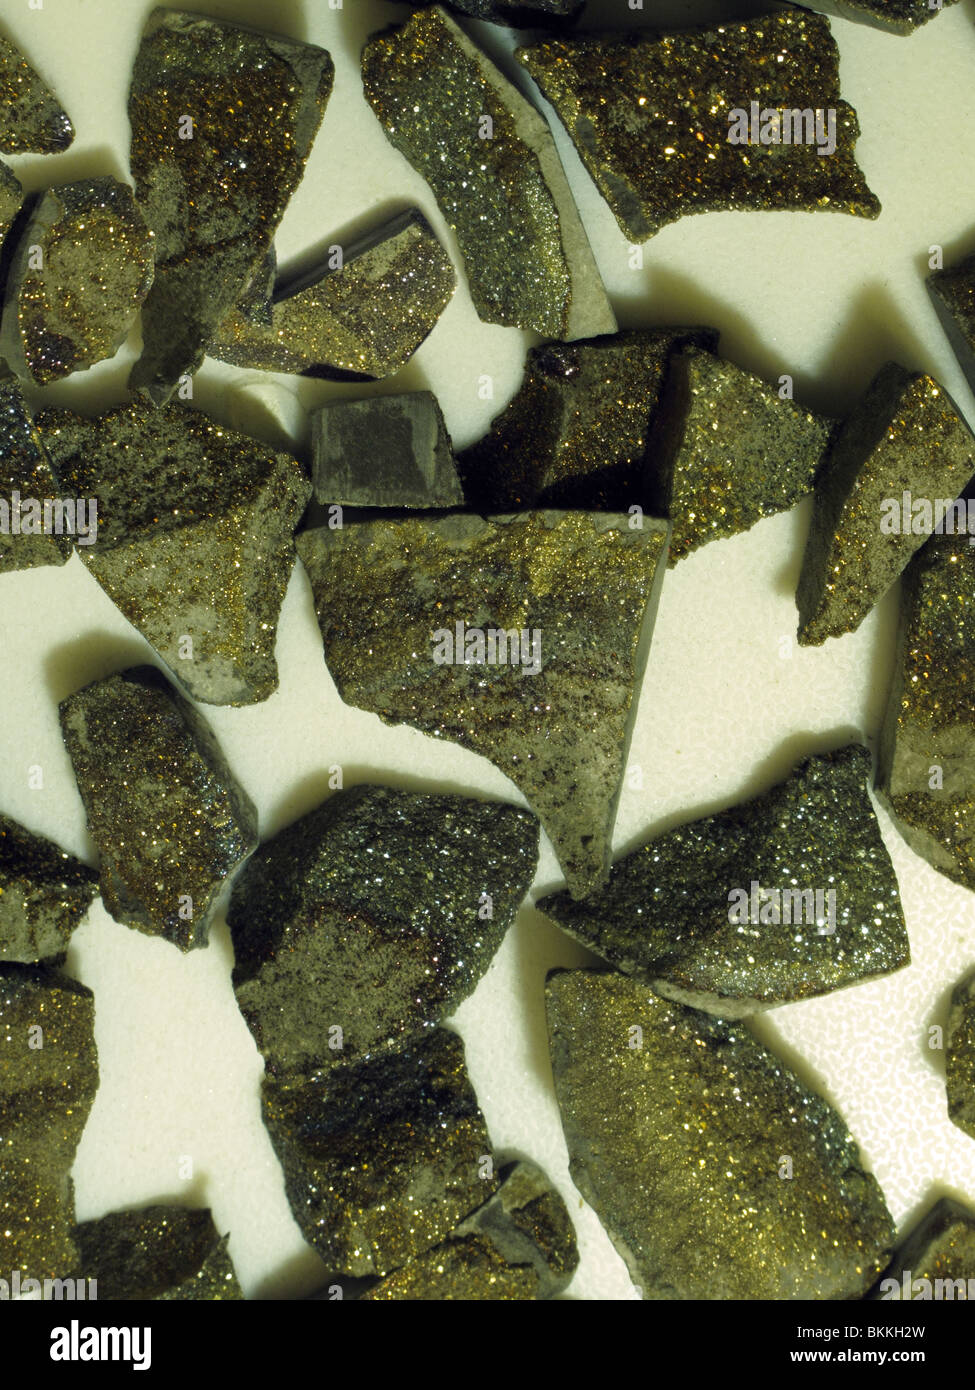 Semi precious raw chalcopyrite stones (a copper iron sulfide mineral ) Chemical composition CuFeS2. Stock Photo